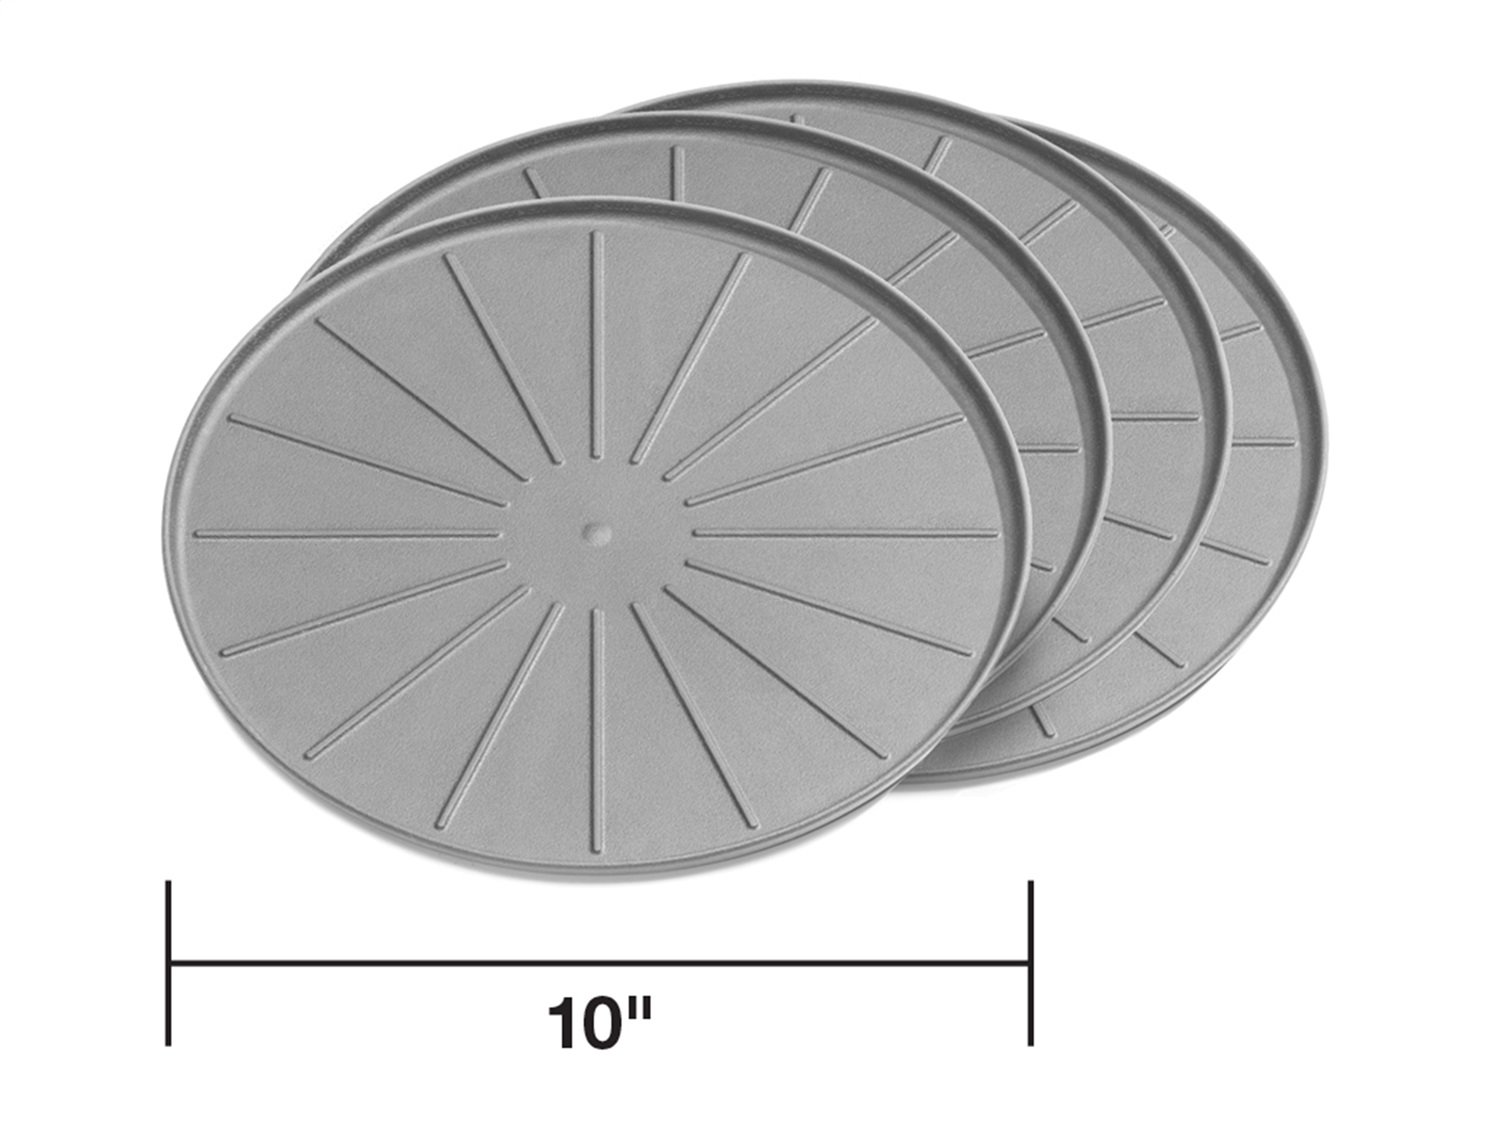 10" Round Coaster Set - Grey